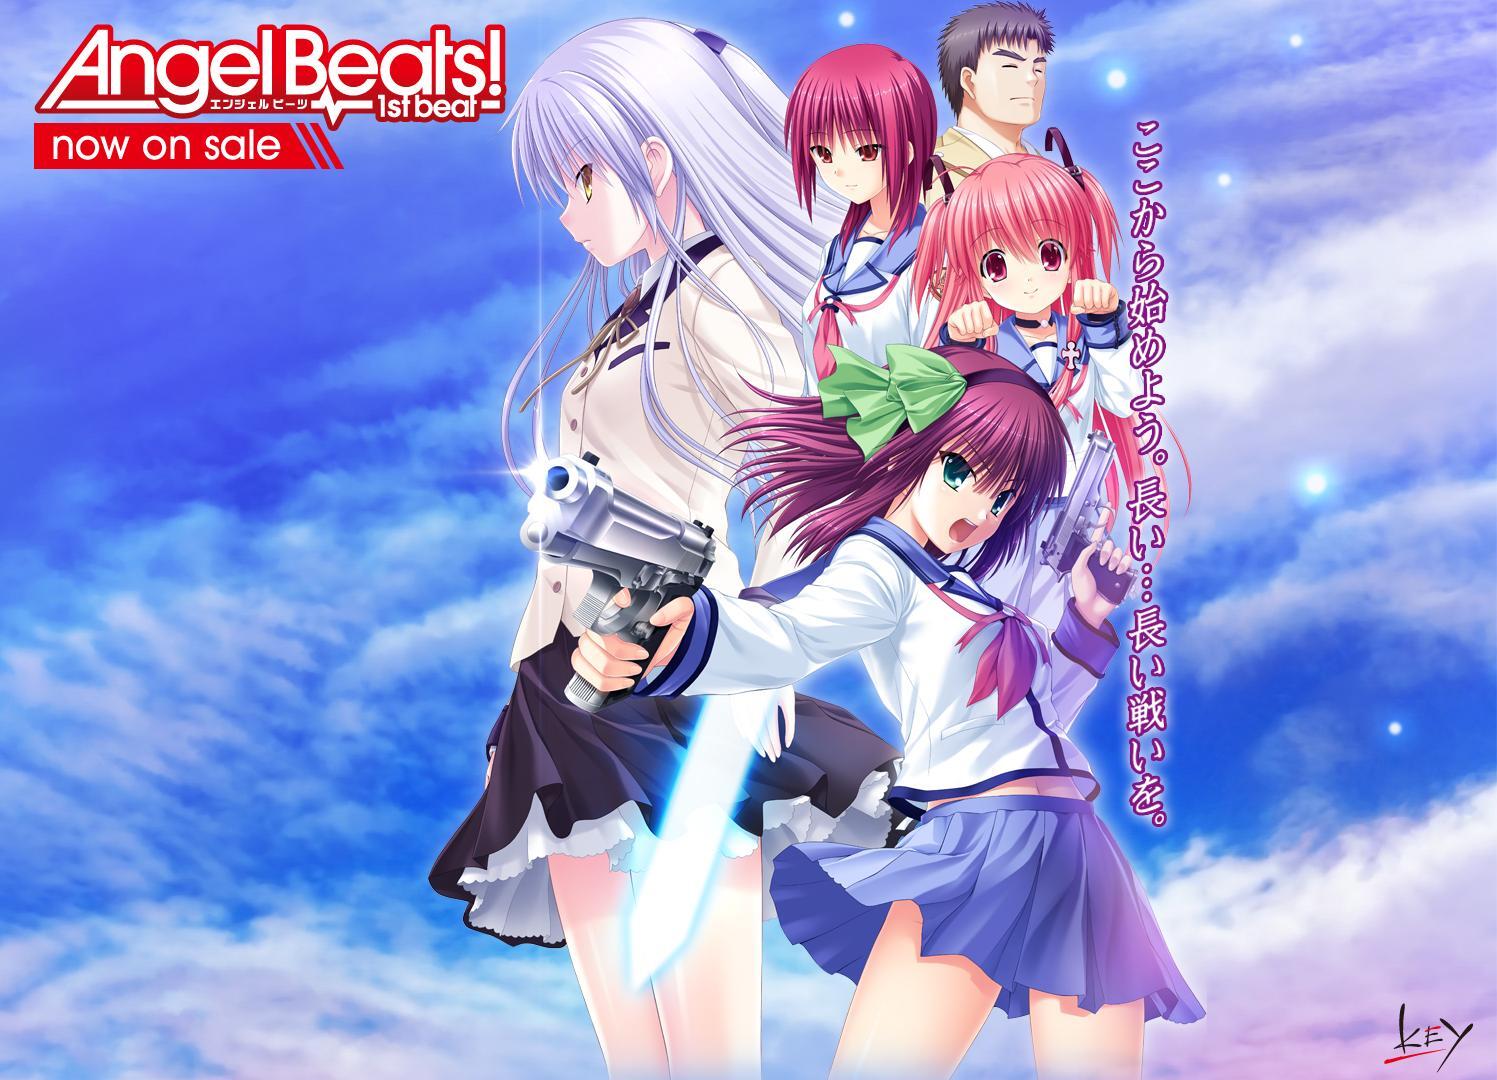 [AVG]Angel Beats! -1st beat- V1.0 汉化免安装版[3.78G]